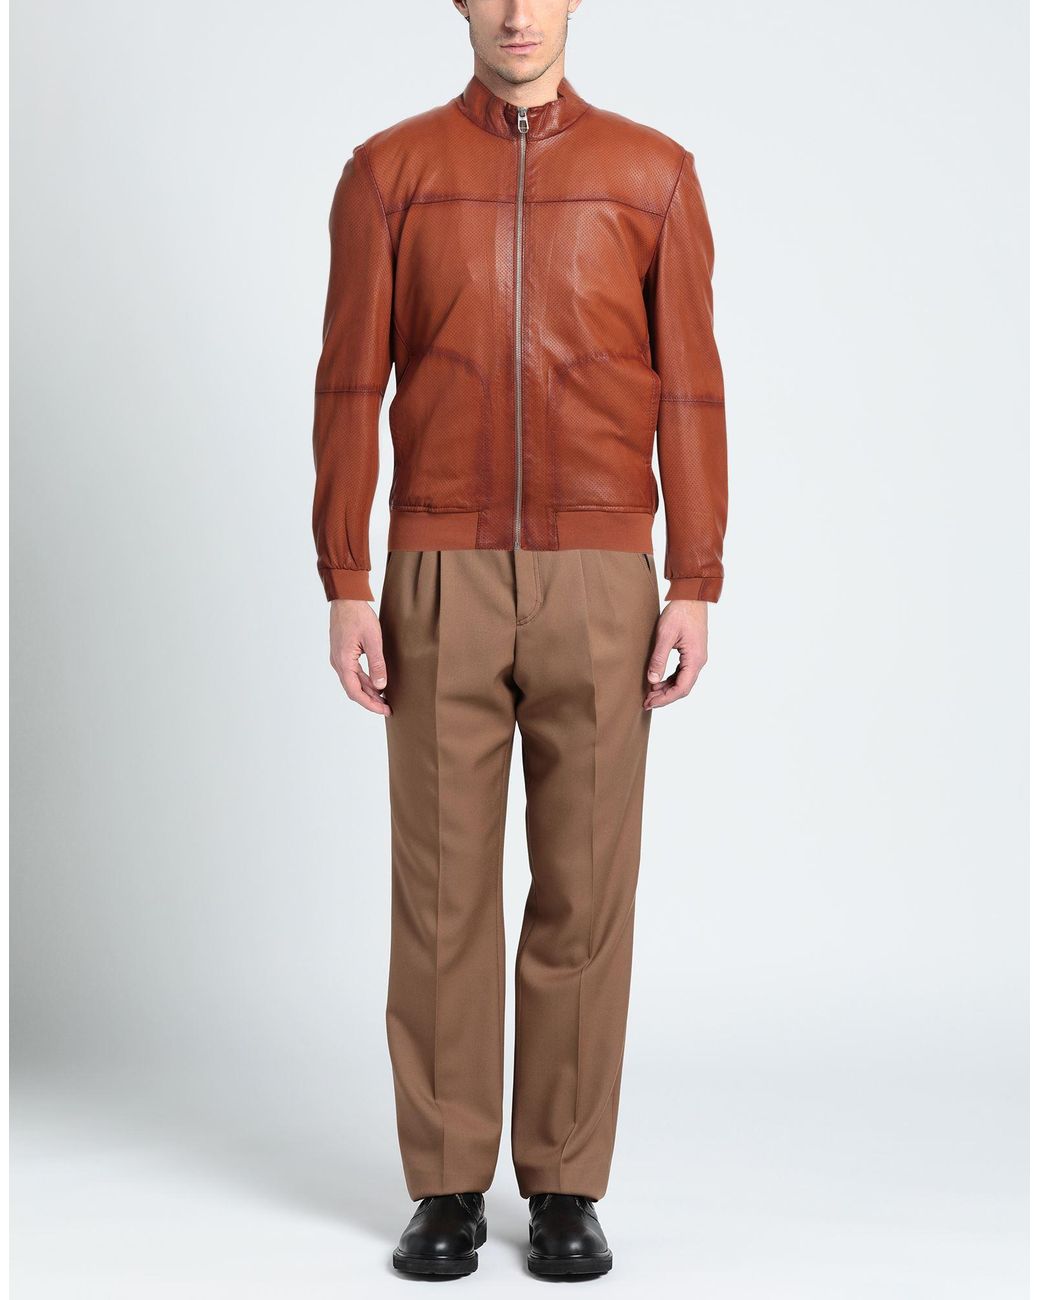 Men's jacket MILESTONE (original) 301089-20210-1-58/20-21 — buy online  store — Pirkl